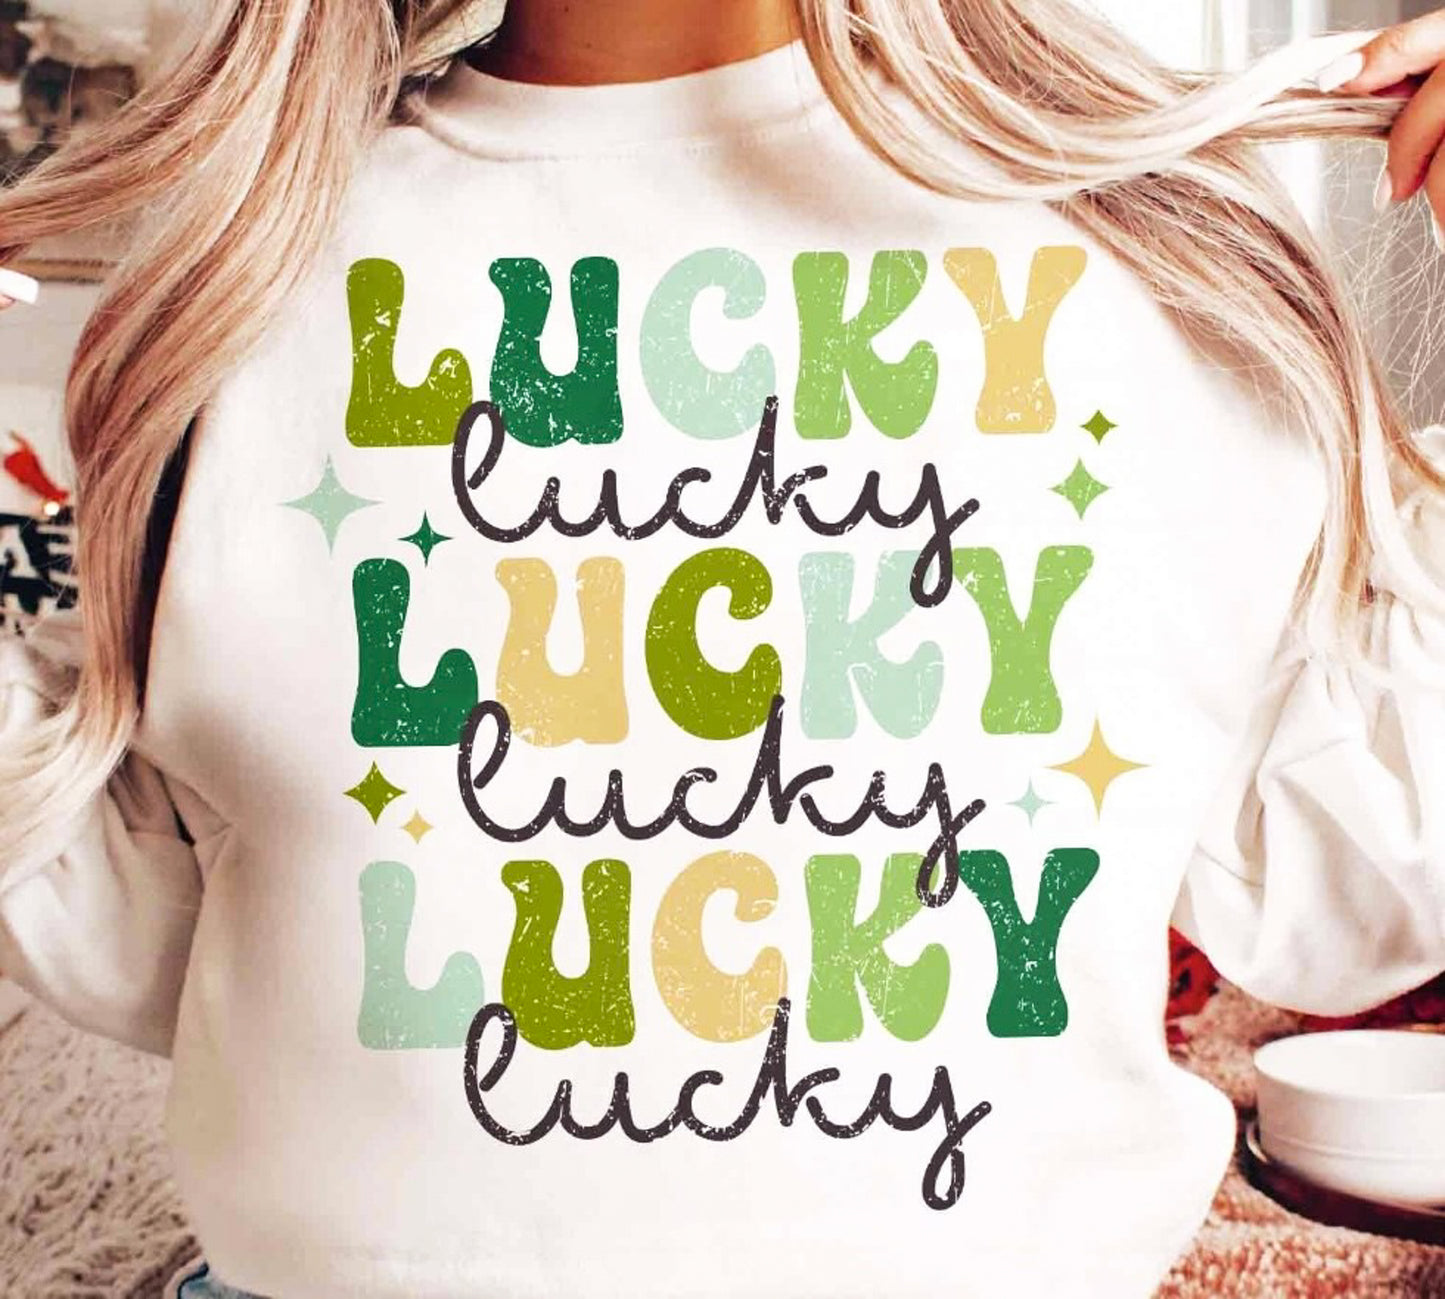 Lucky Lucky Lucky Sweatshirt